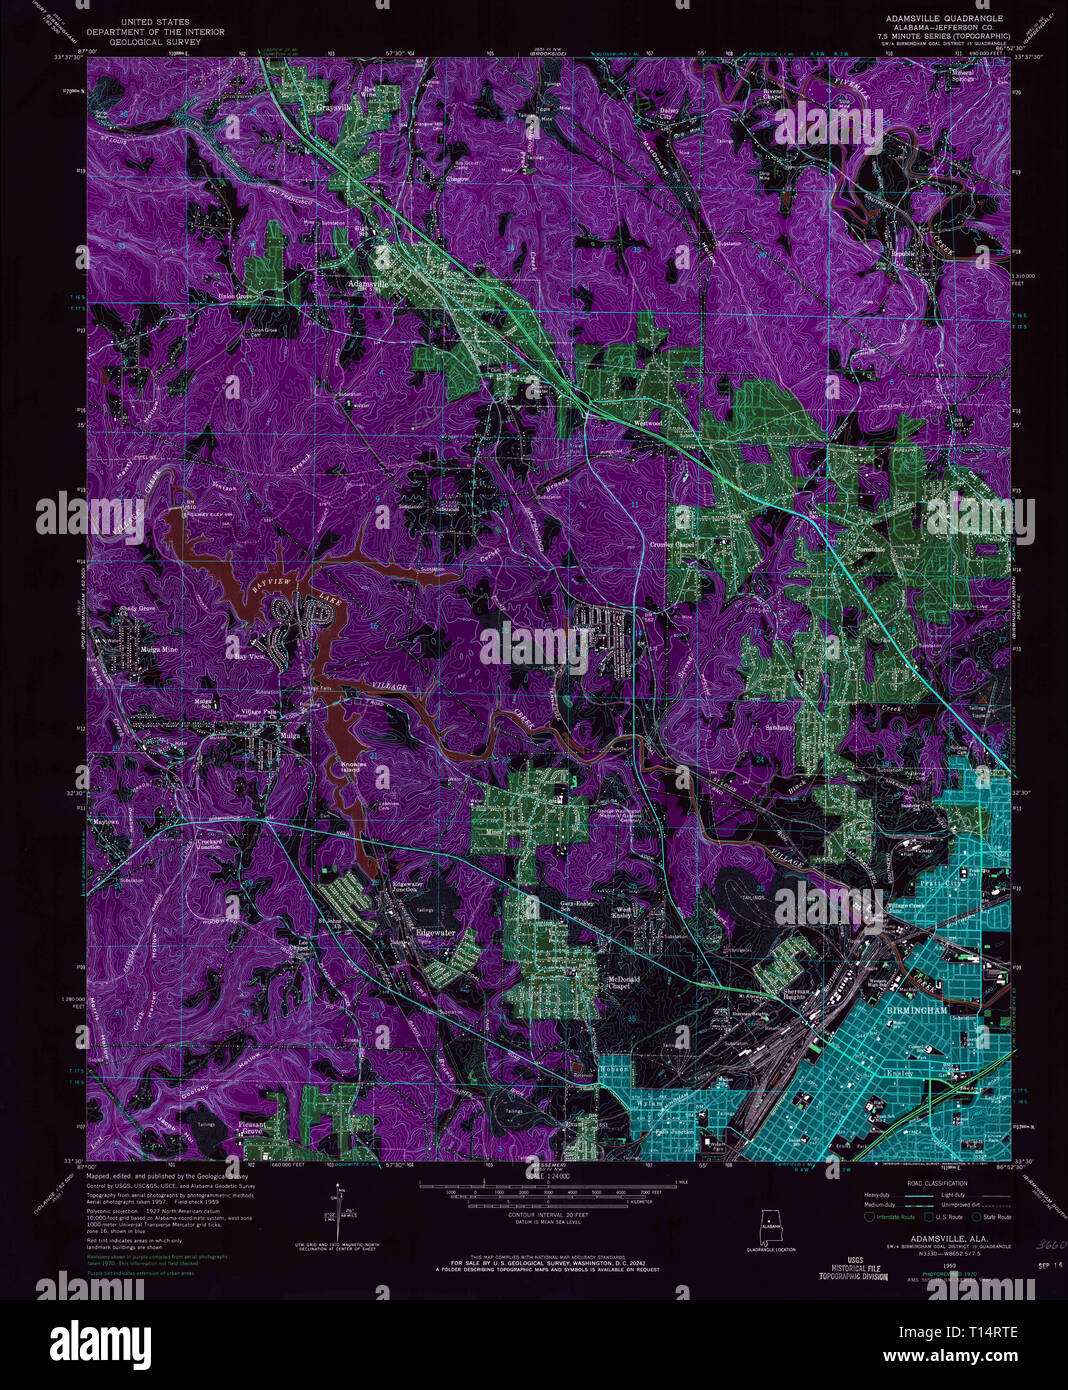 USGS TOPO Map Alabama AL Adamsville 303072 1959 24000 Inverted Stock Photo